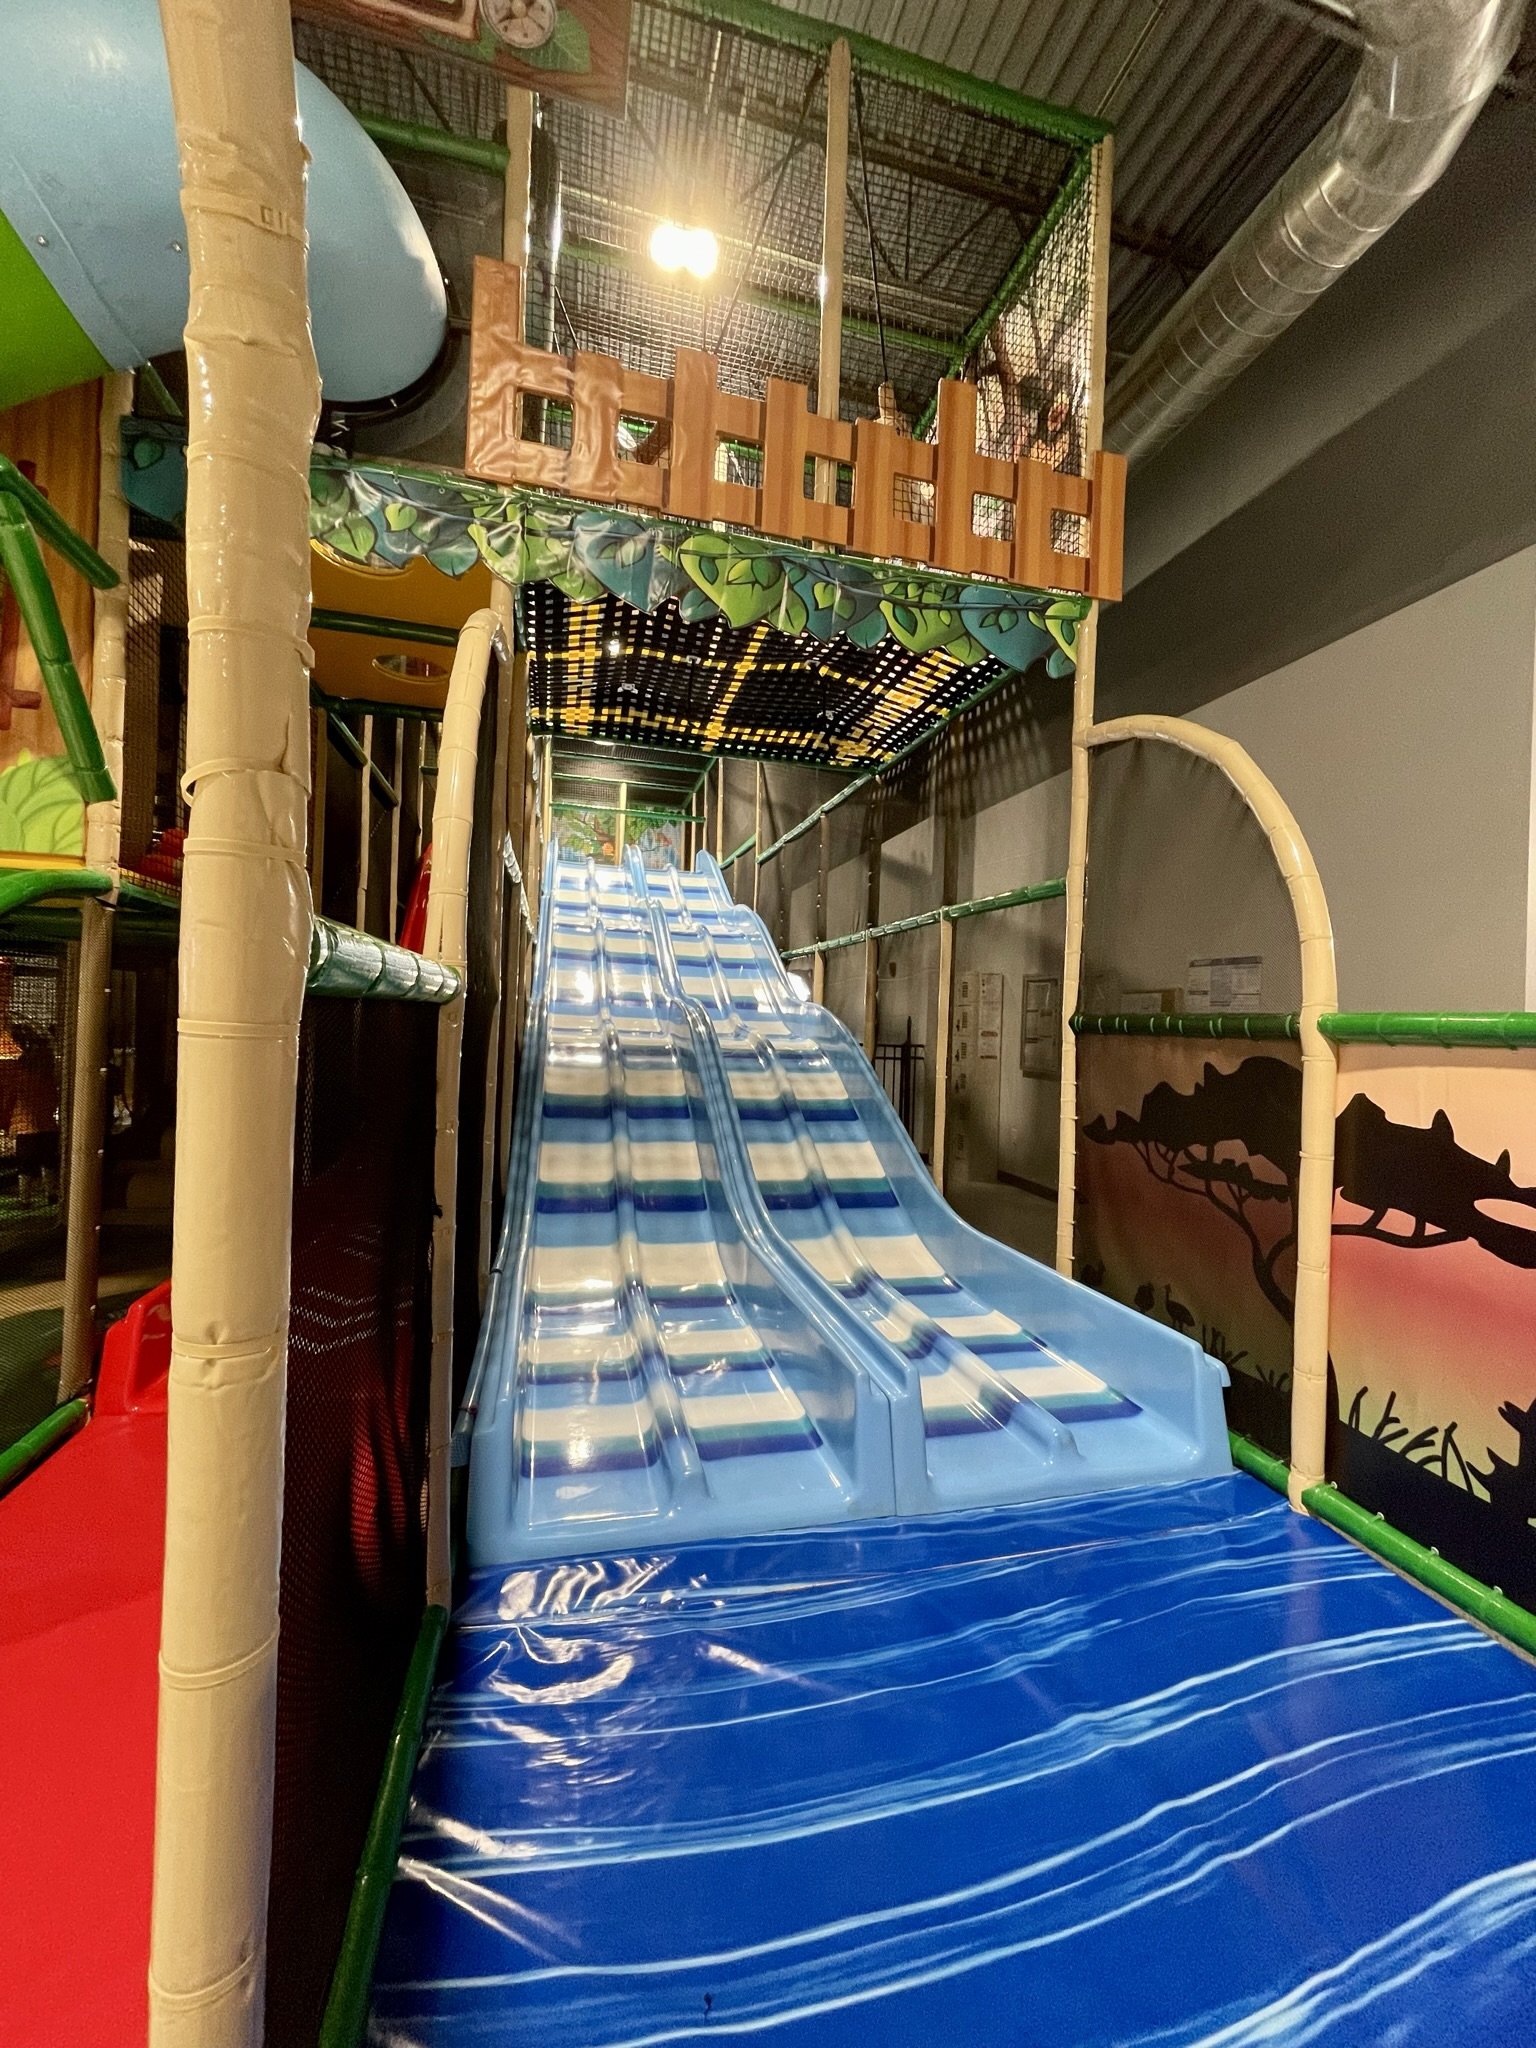 kangas indoor playcenter independence_kidsinkc_indoor experience gift for kids (2).JPEG